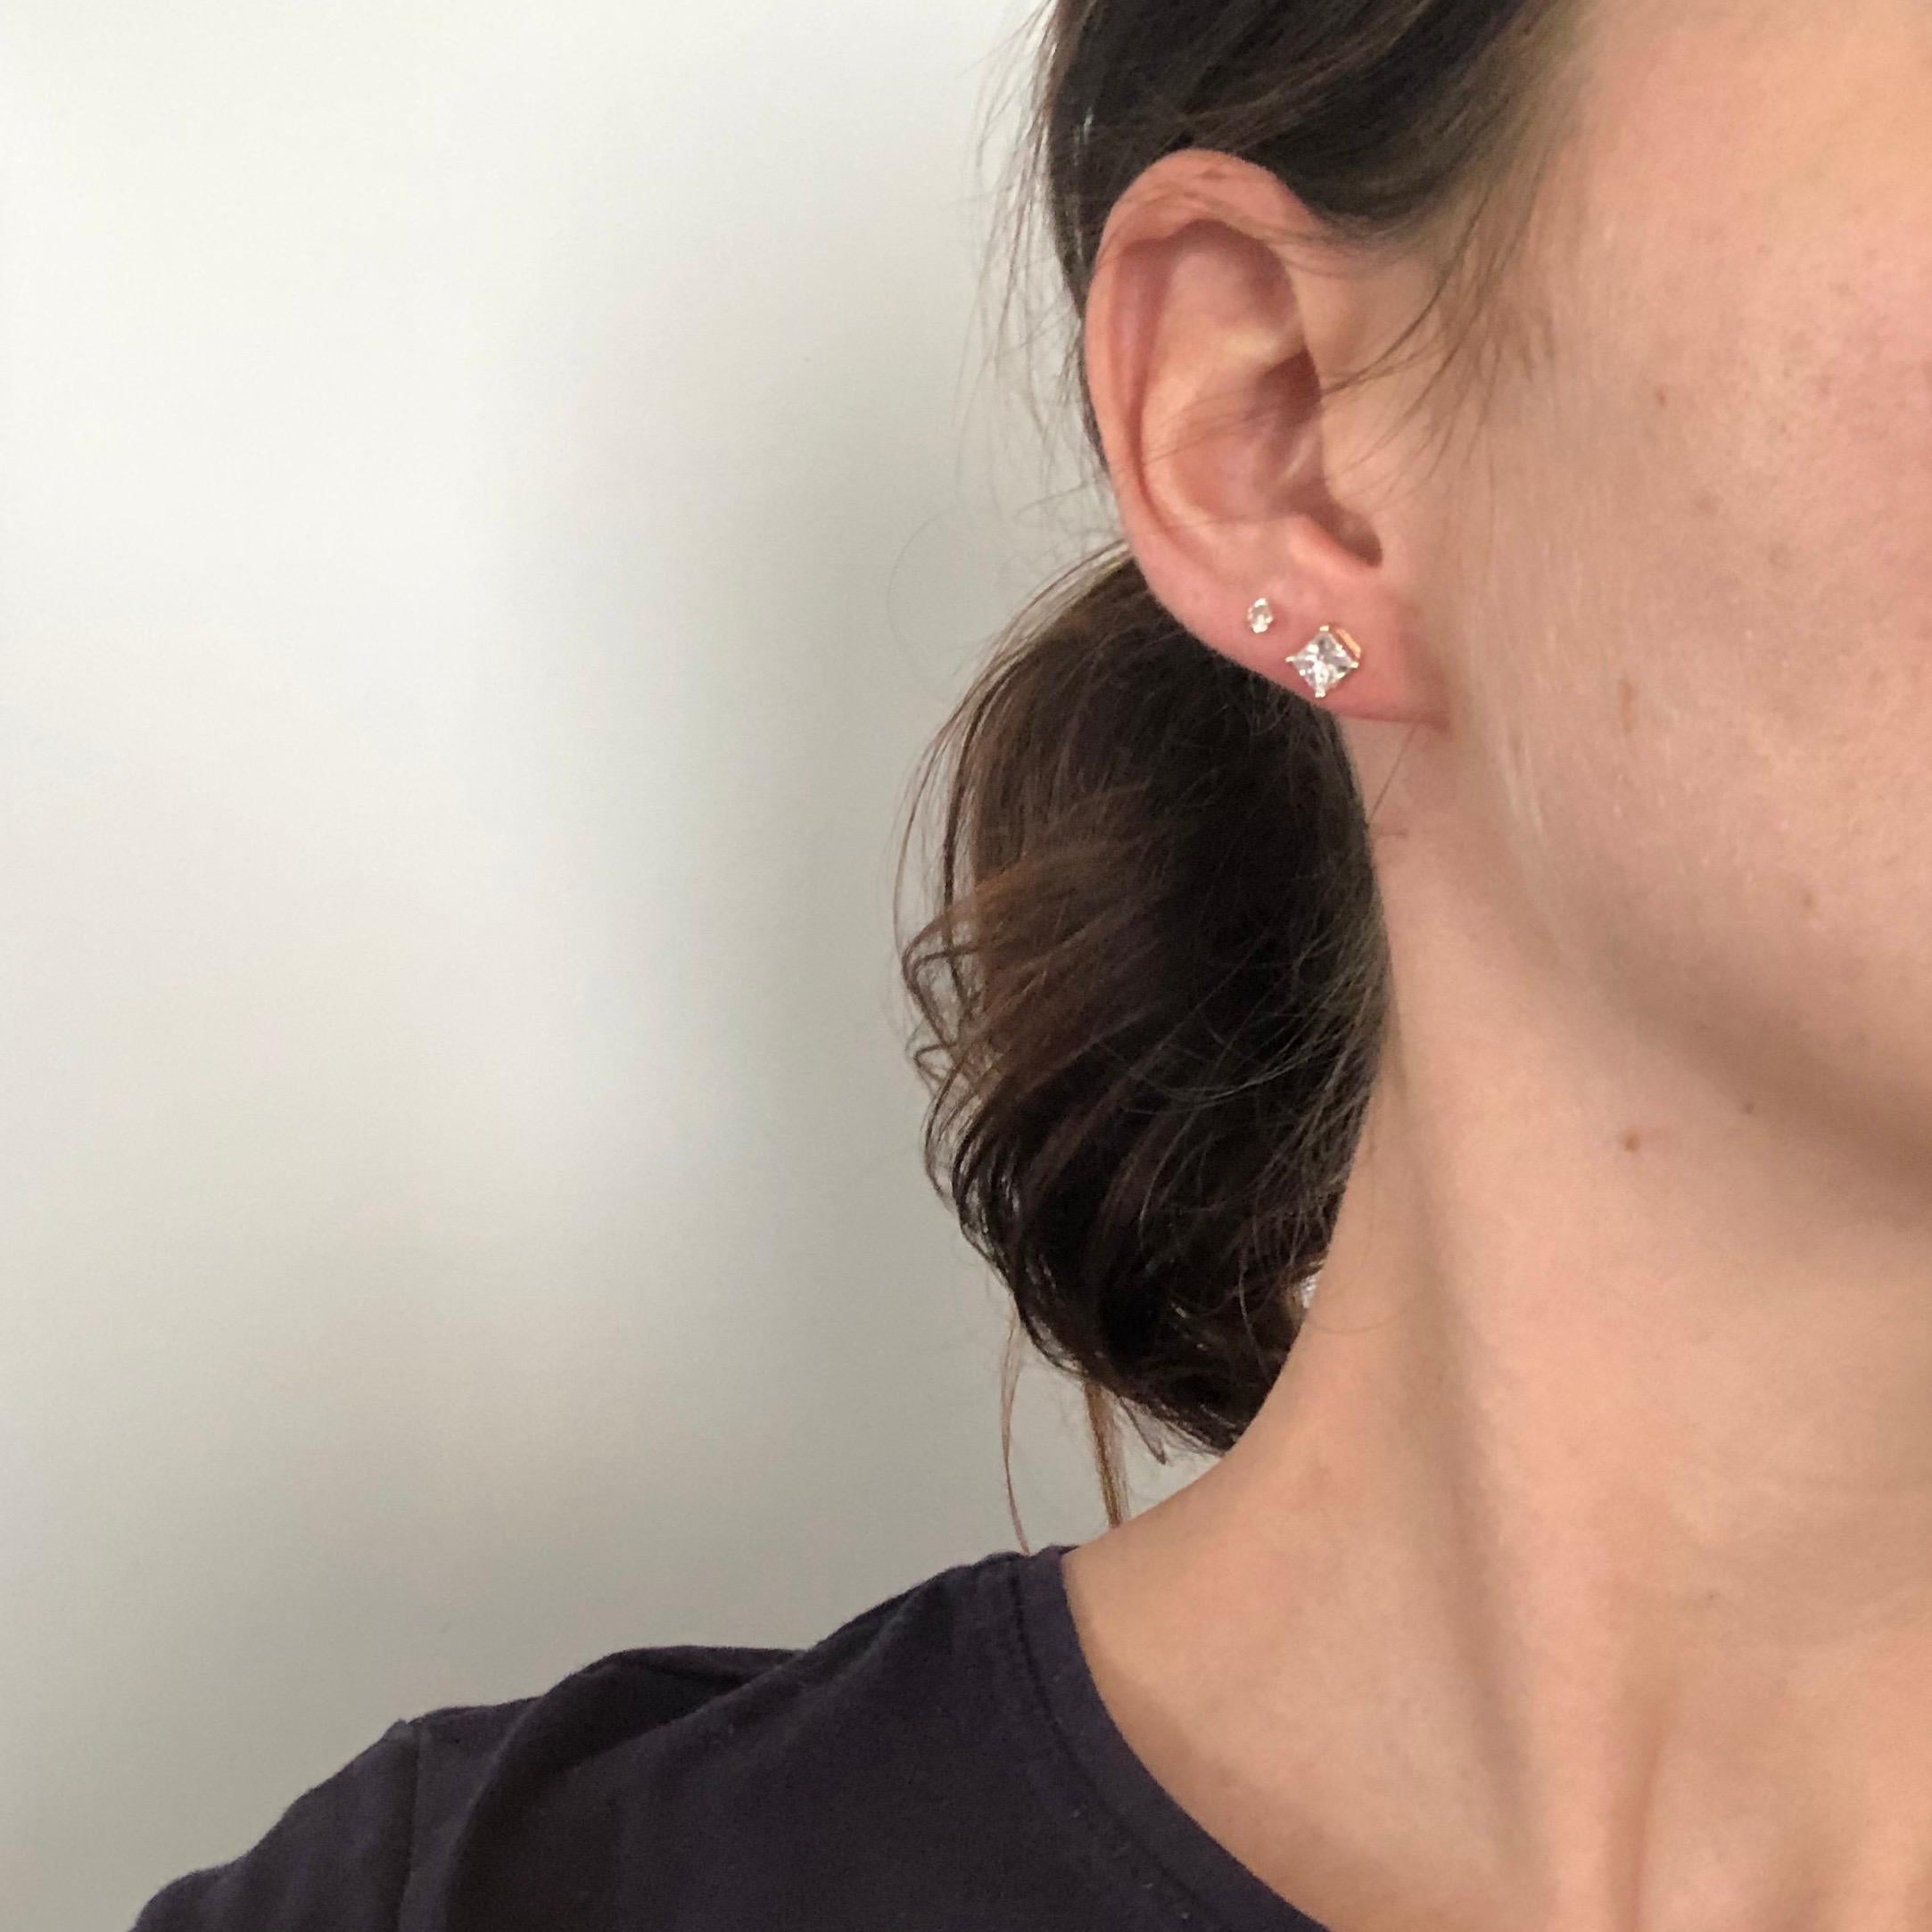 princess cut diamond earrings on ear